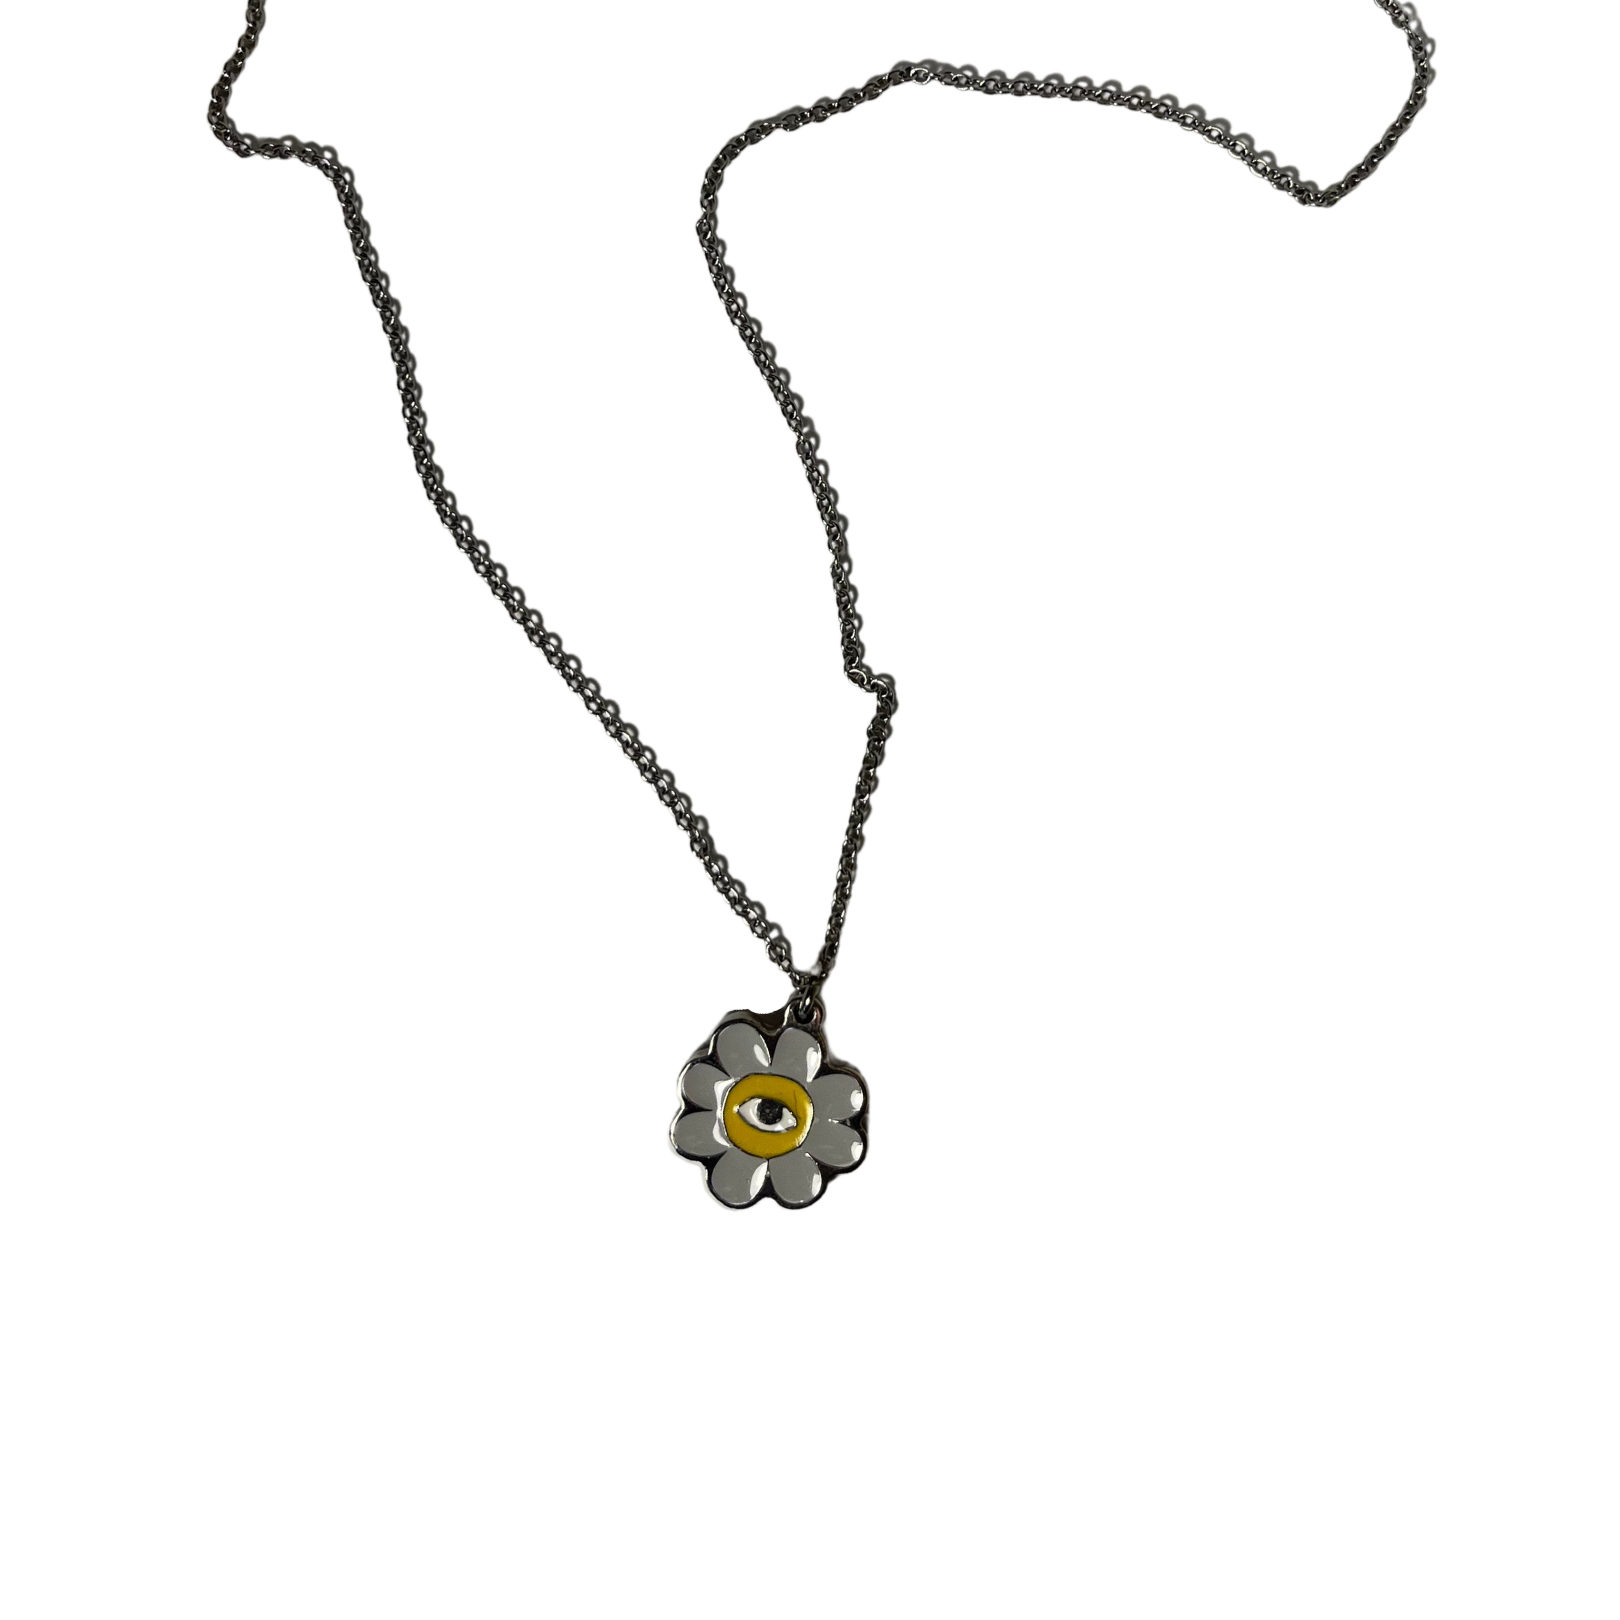 The Cheerfull daisy™ necklace